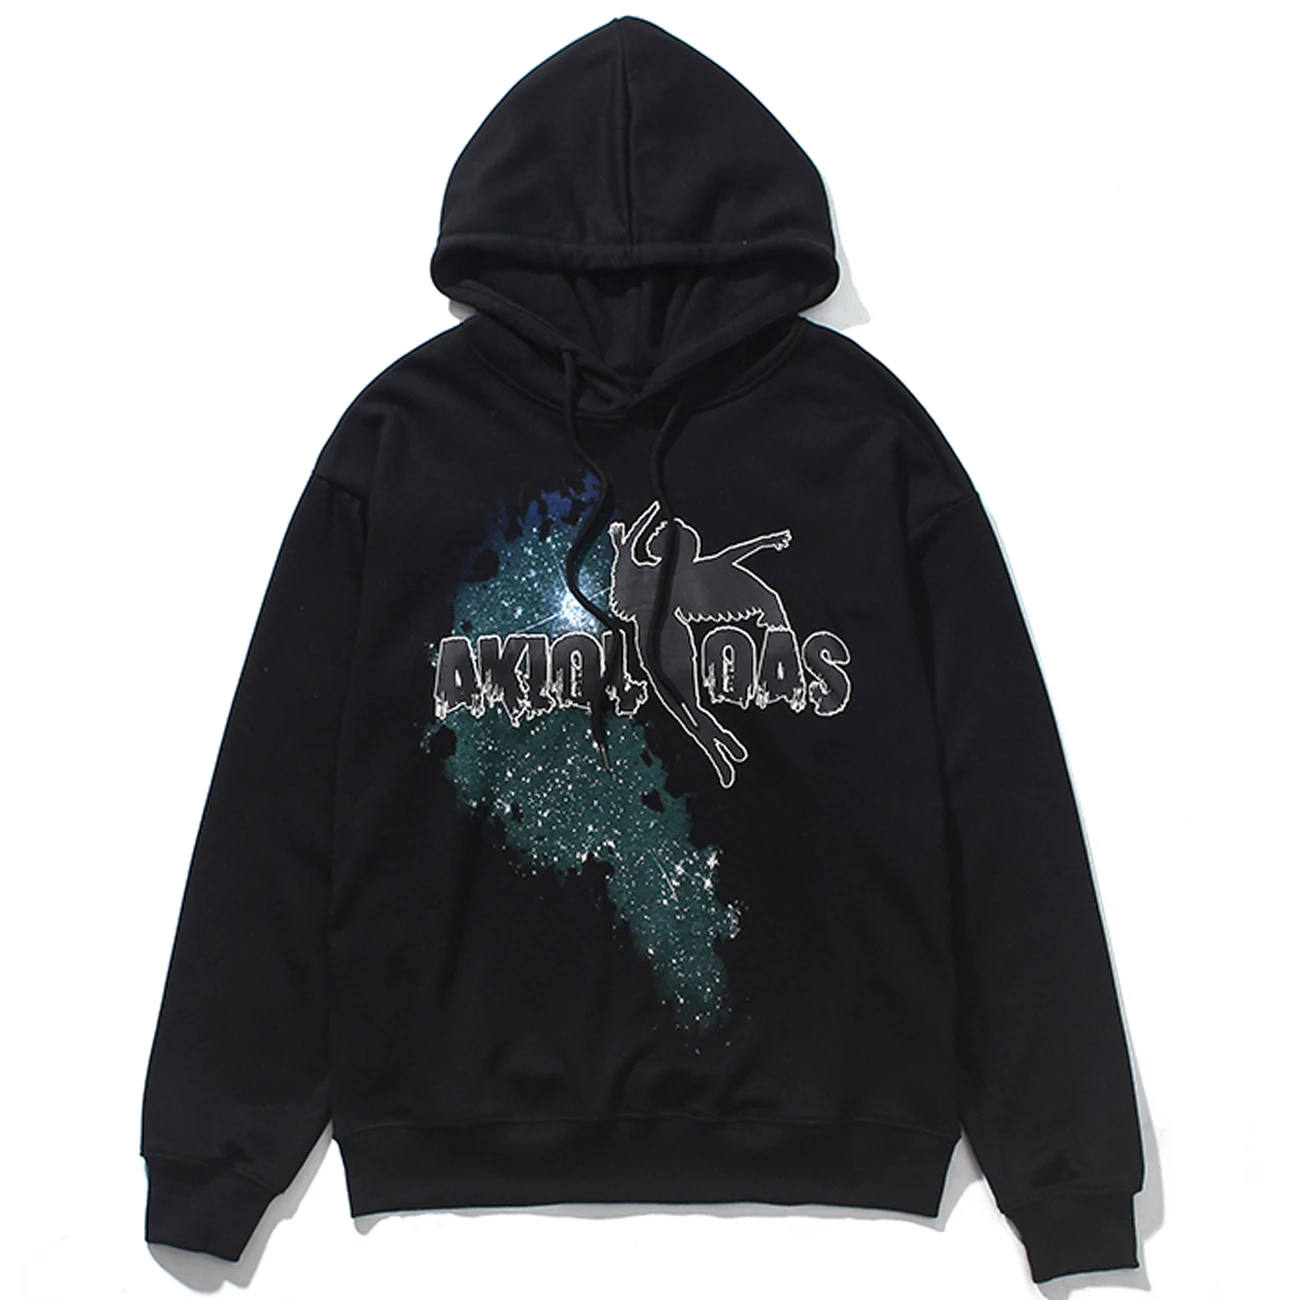 Hip Hop Črni Bombaž Ulične pulover s kapuco za Moške Jopice Jeseni Retro vzorec Tiskanja Hoodie Puloverji Harajuku Sweatshirts